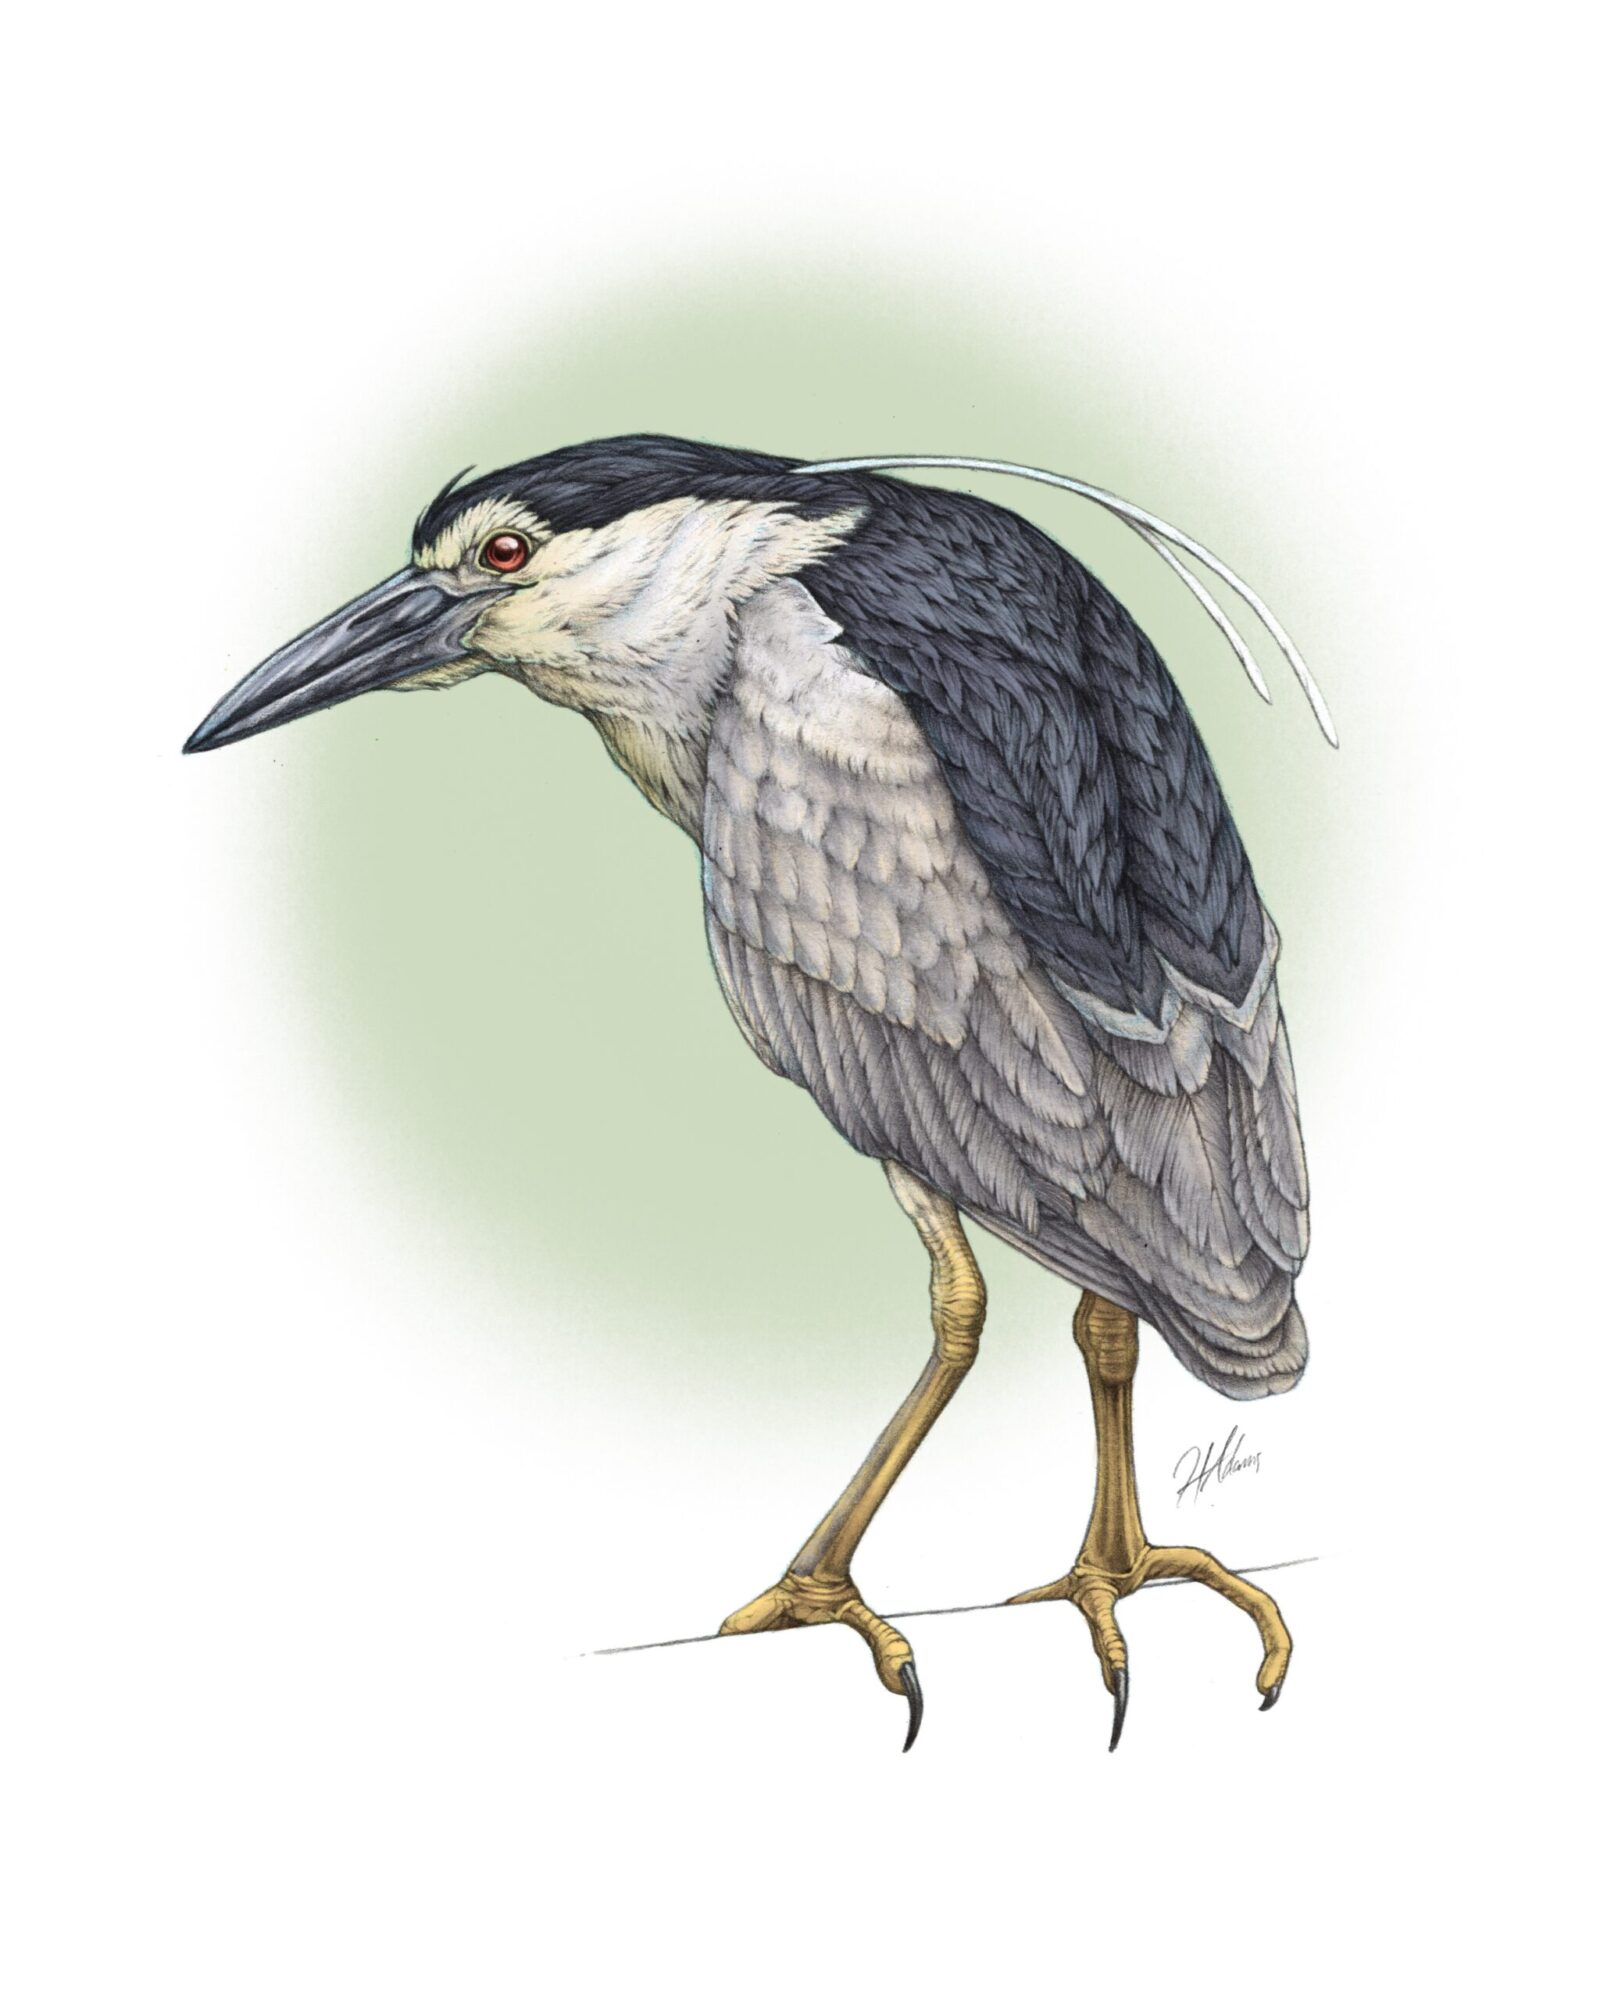 Black-crowned nigh heron illustration